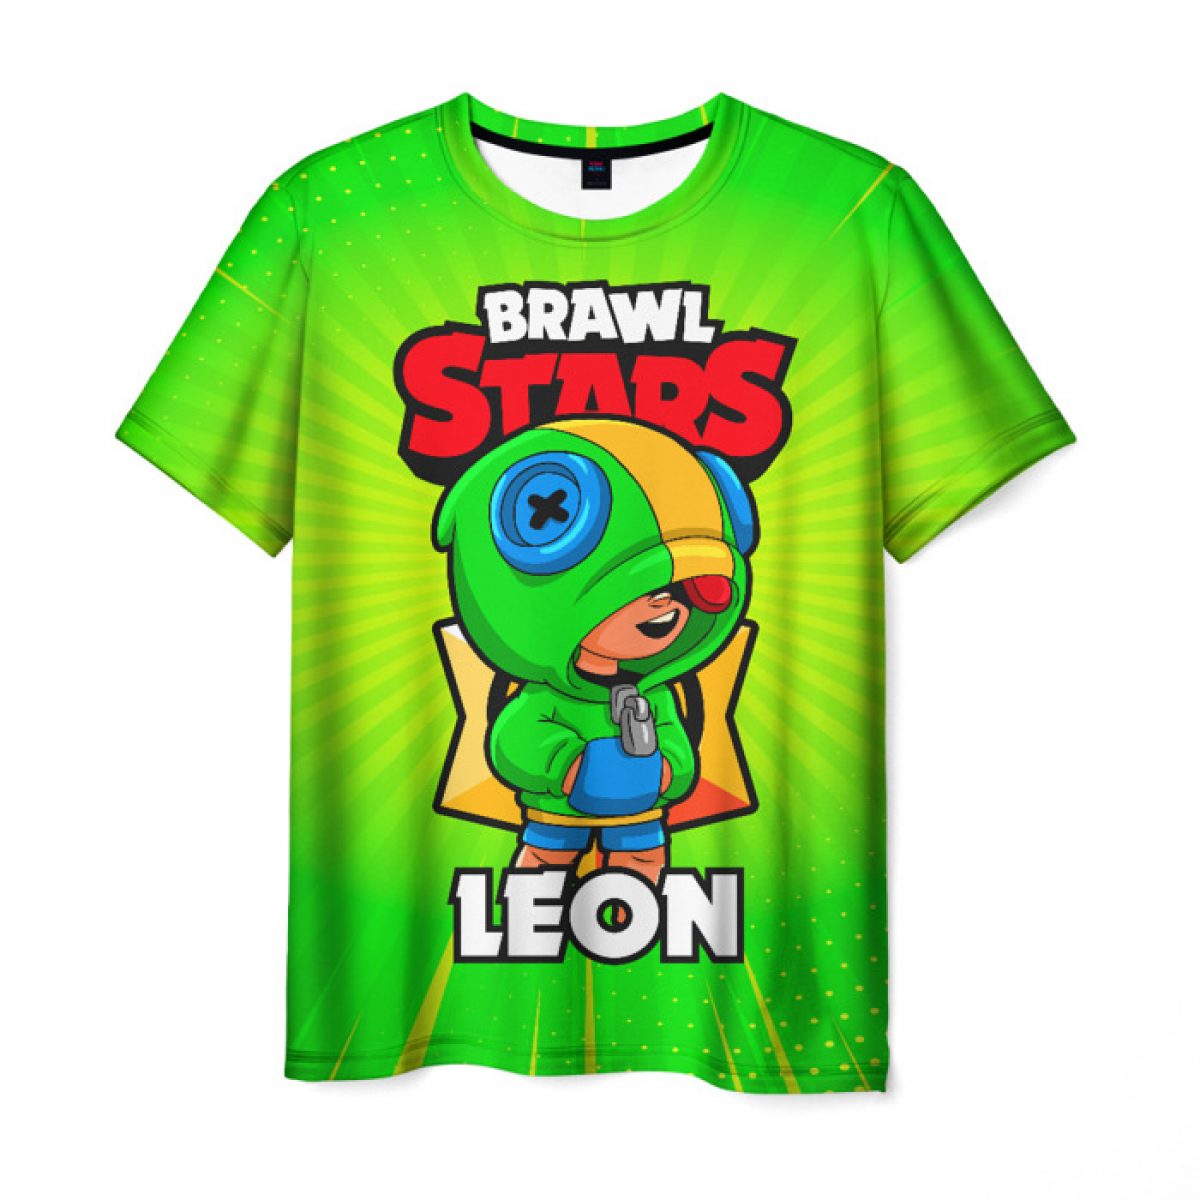 Buy Men S T Shirt Green Design Print Brawl Stars Leon Idolstore - brawl stars t shirt